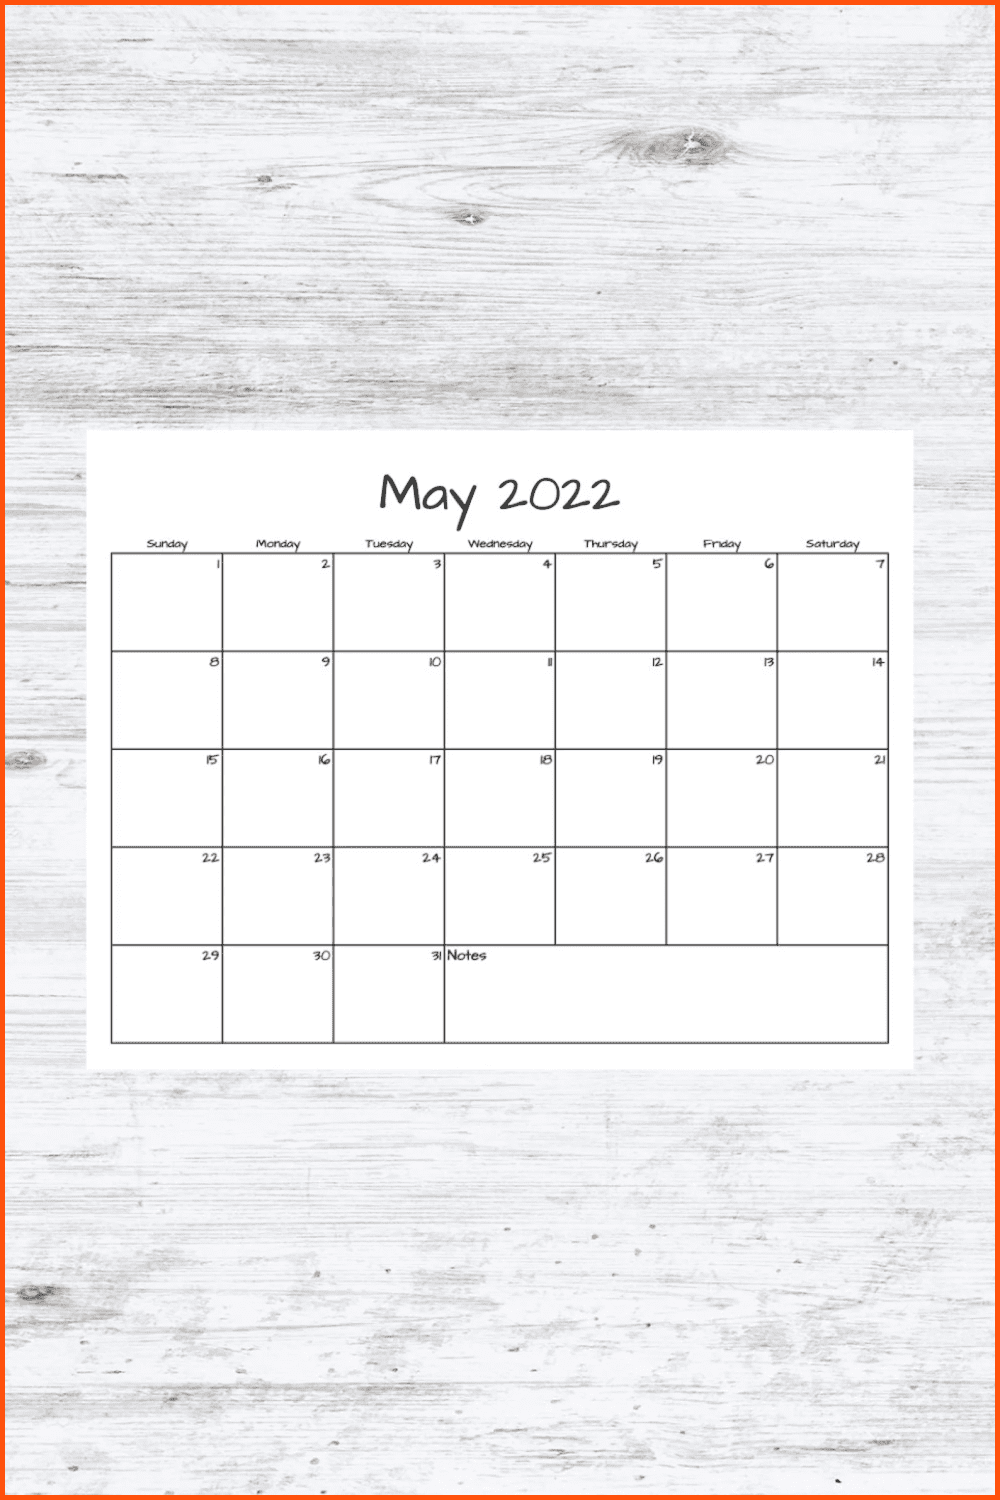 Blank May 2022 calendar.